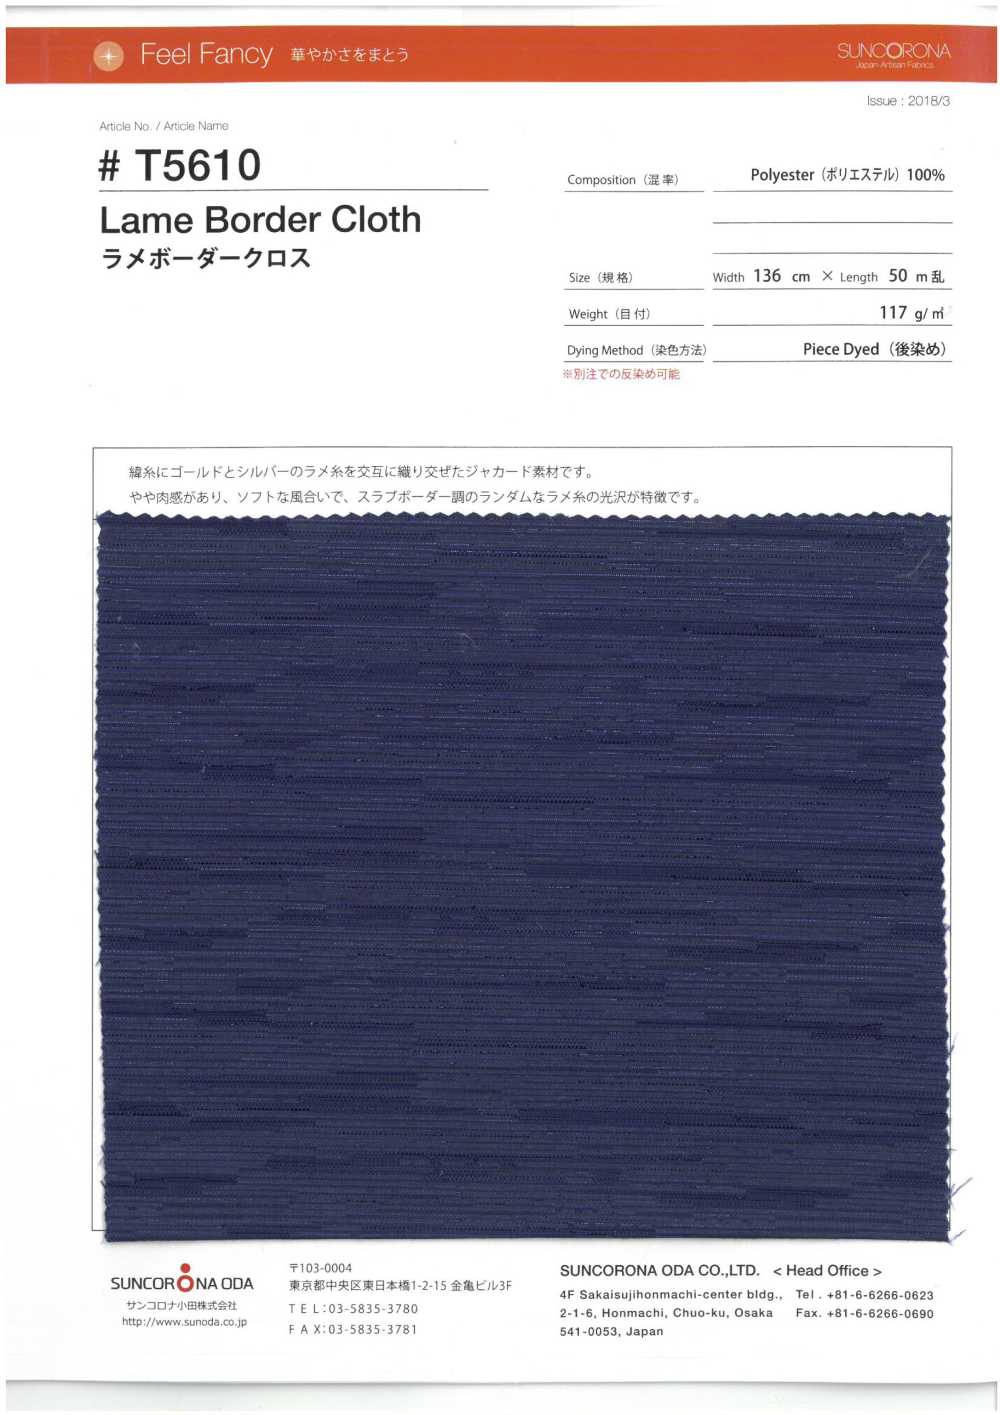 T5610 Jacquard Lame Rayas Horizontales[Fabrica Textil] Suncorona Oda